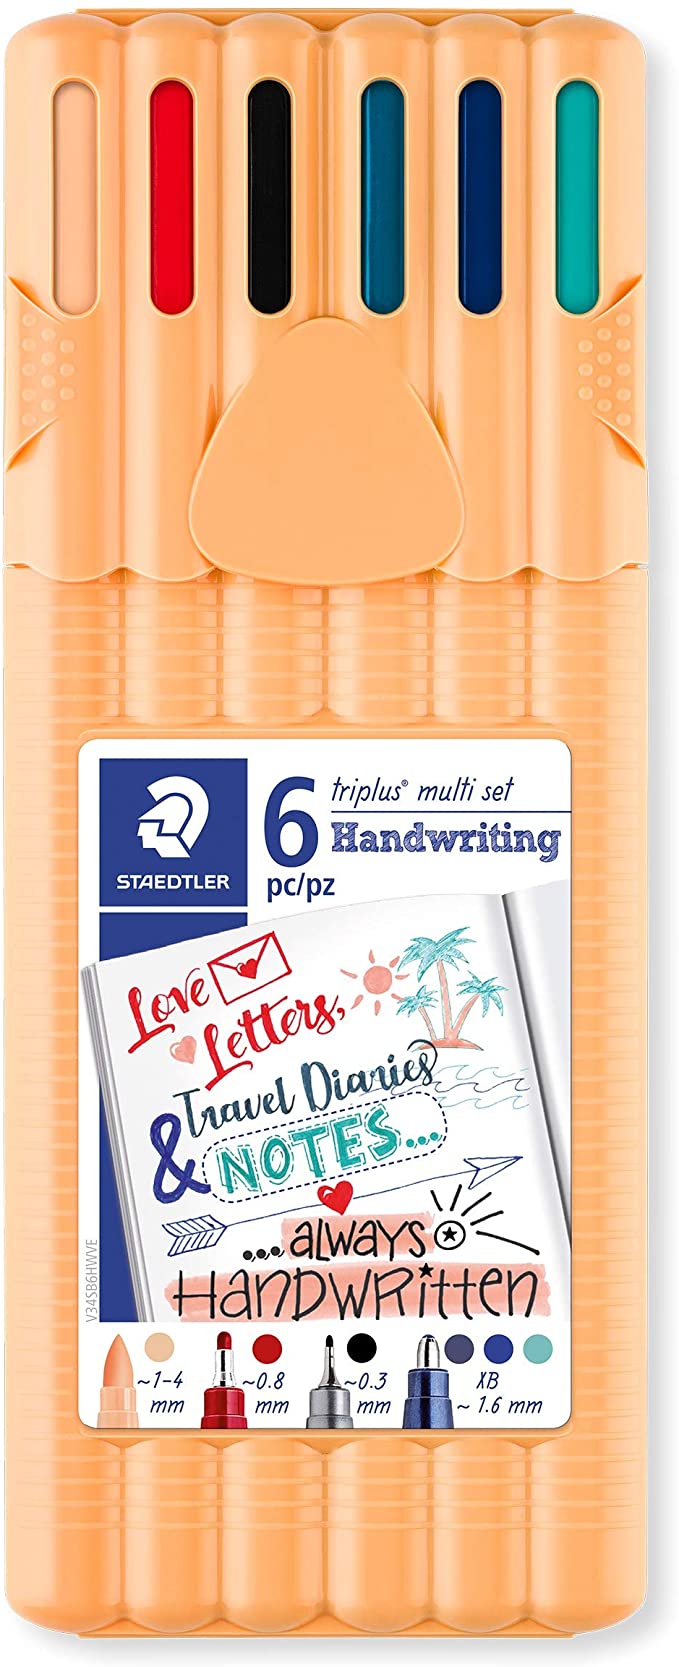 STAEDTLER Triplus Multi Handwriting Set, Desktop Box of 6 Pens